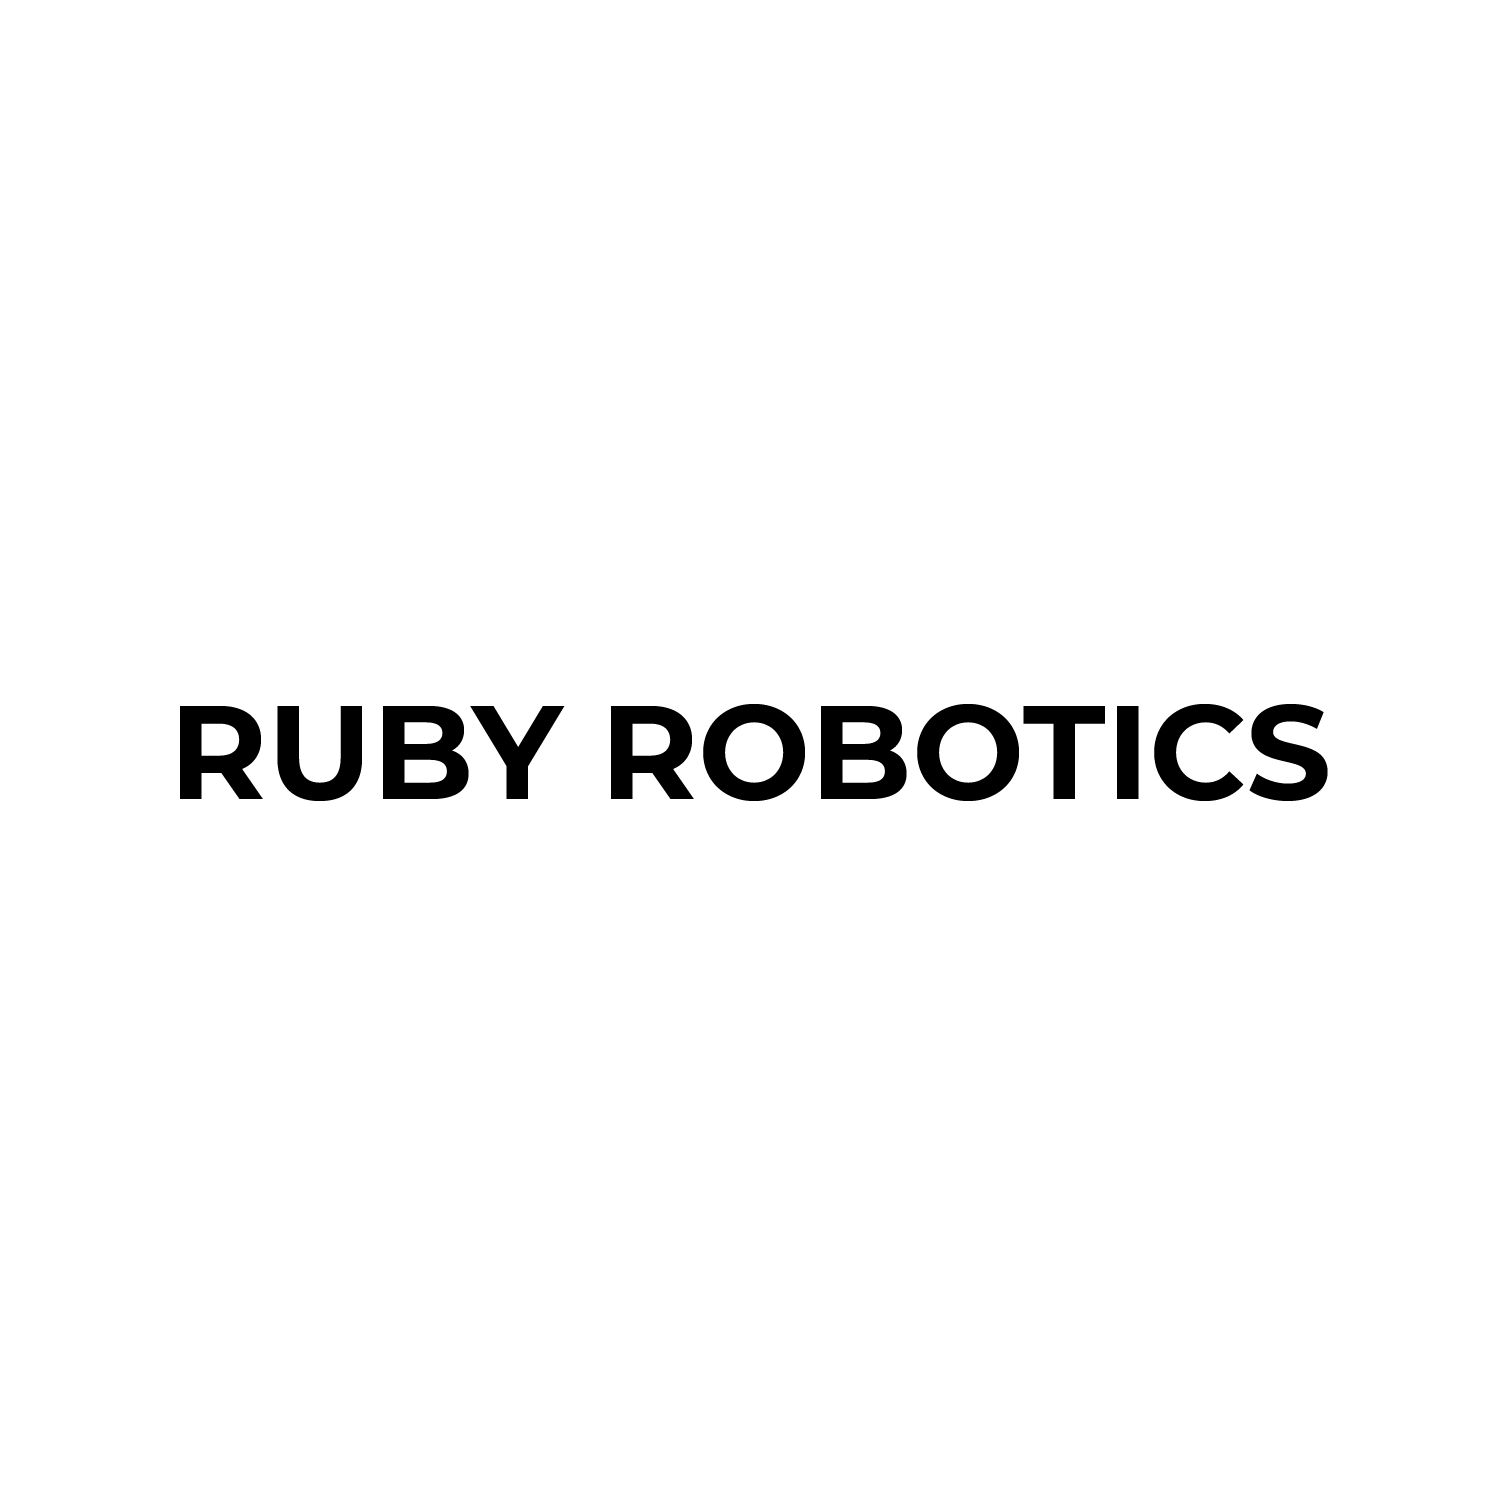 RUBY ROBOTICS